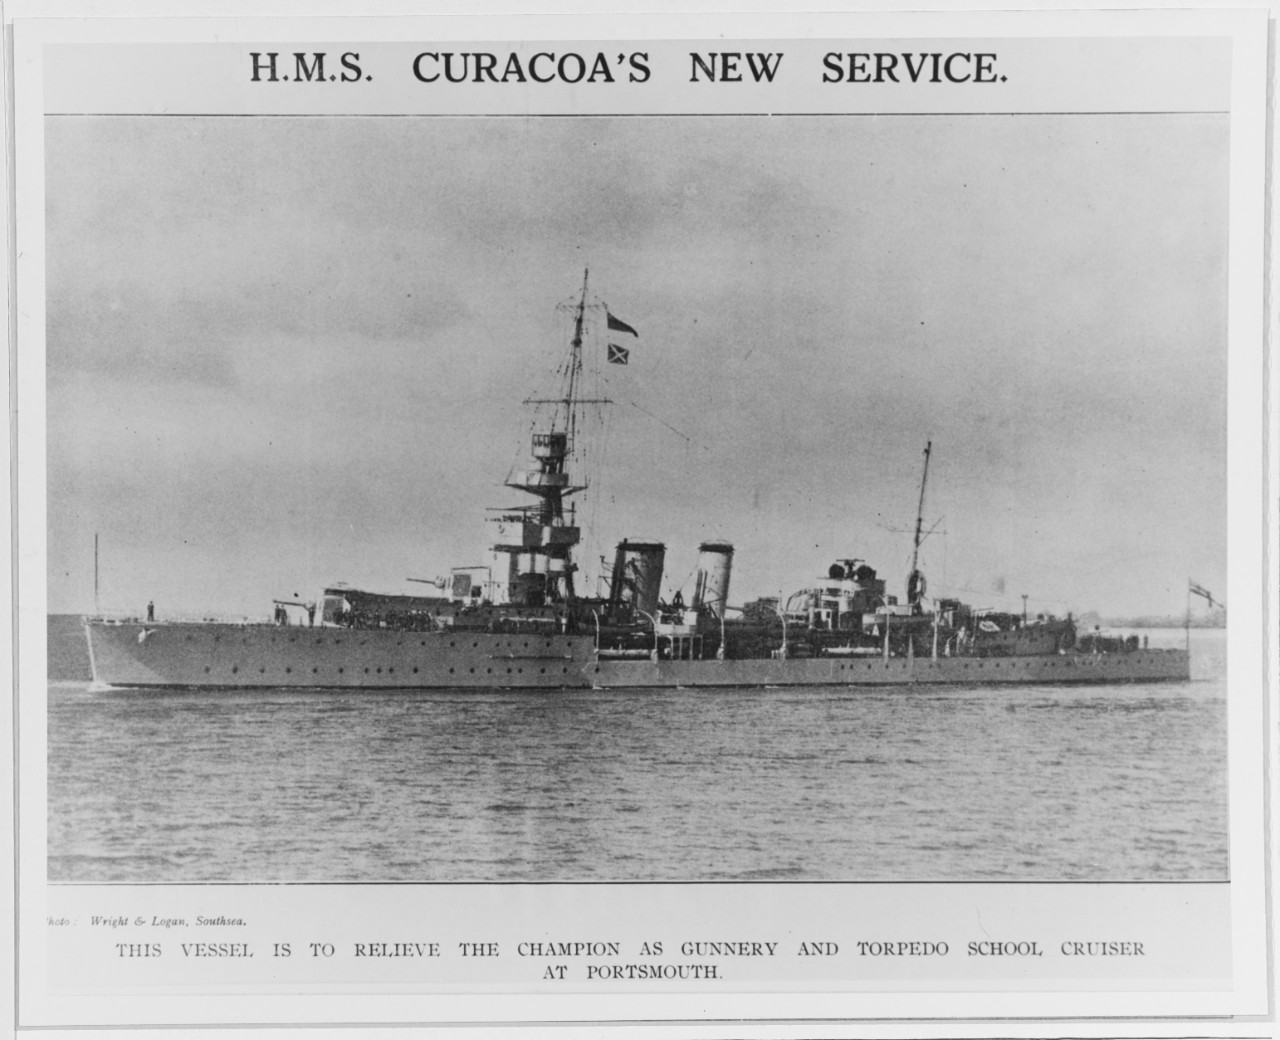 HMS CURACOA (British Cruiser, 1917)